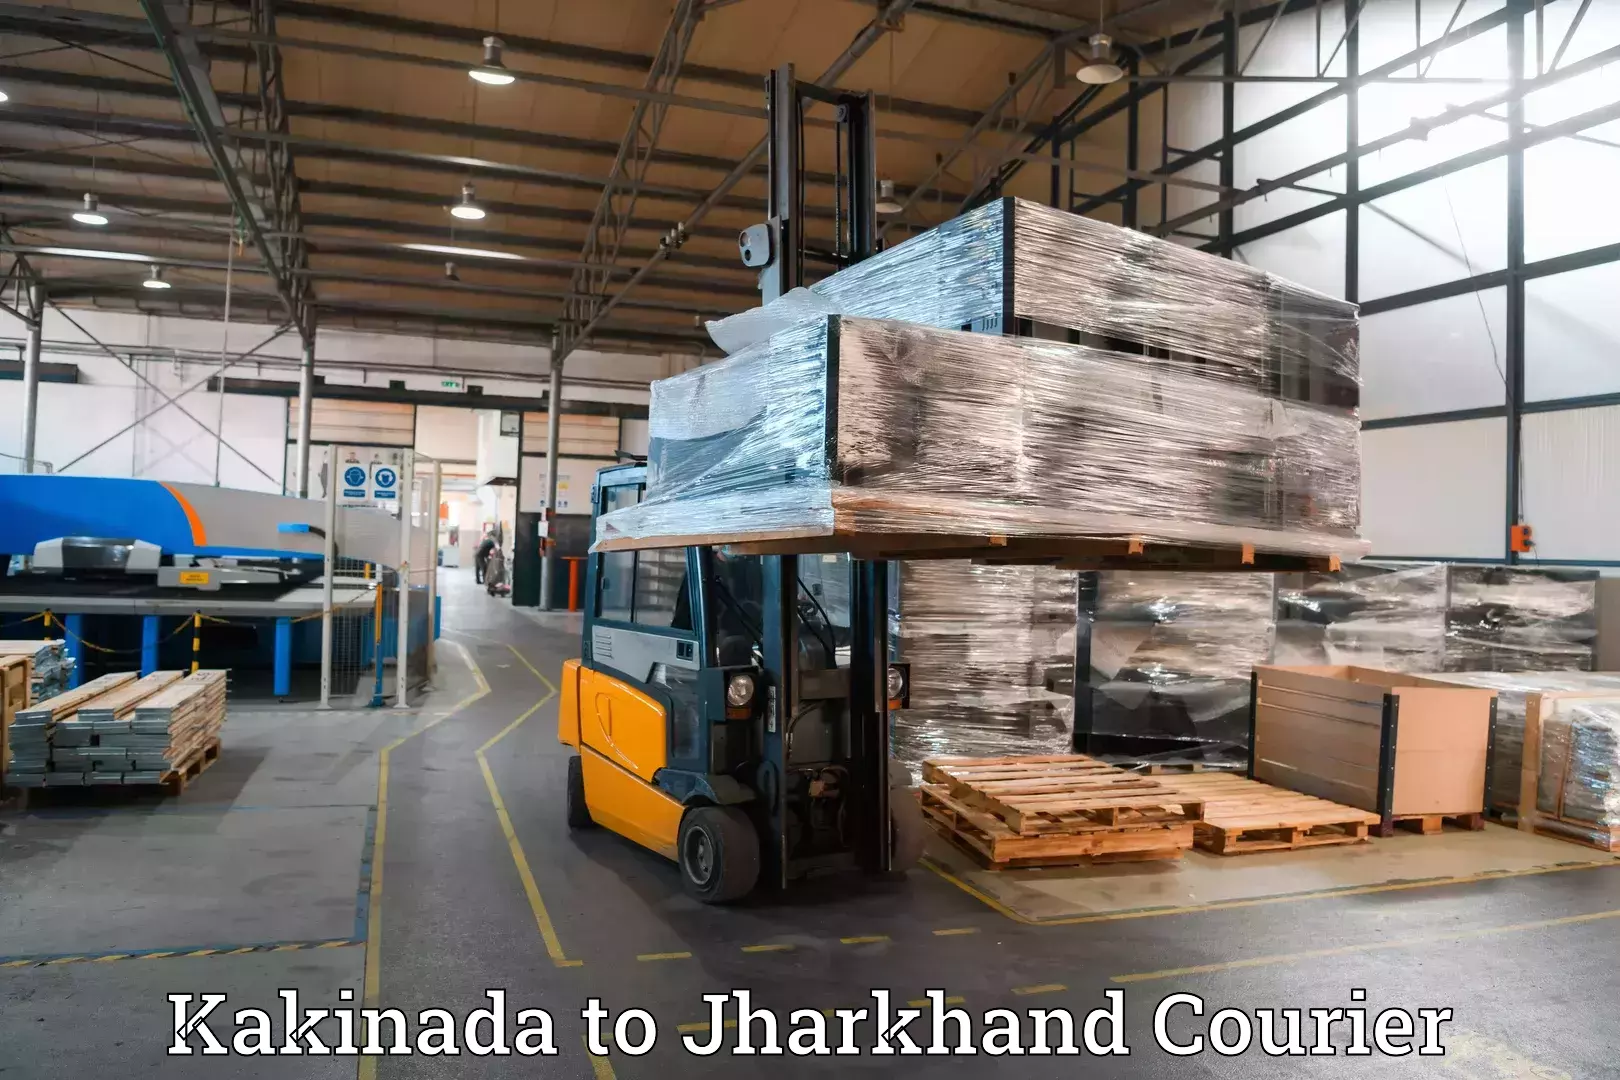 Luggage delivery network Kakinada to Bokaro Steel City